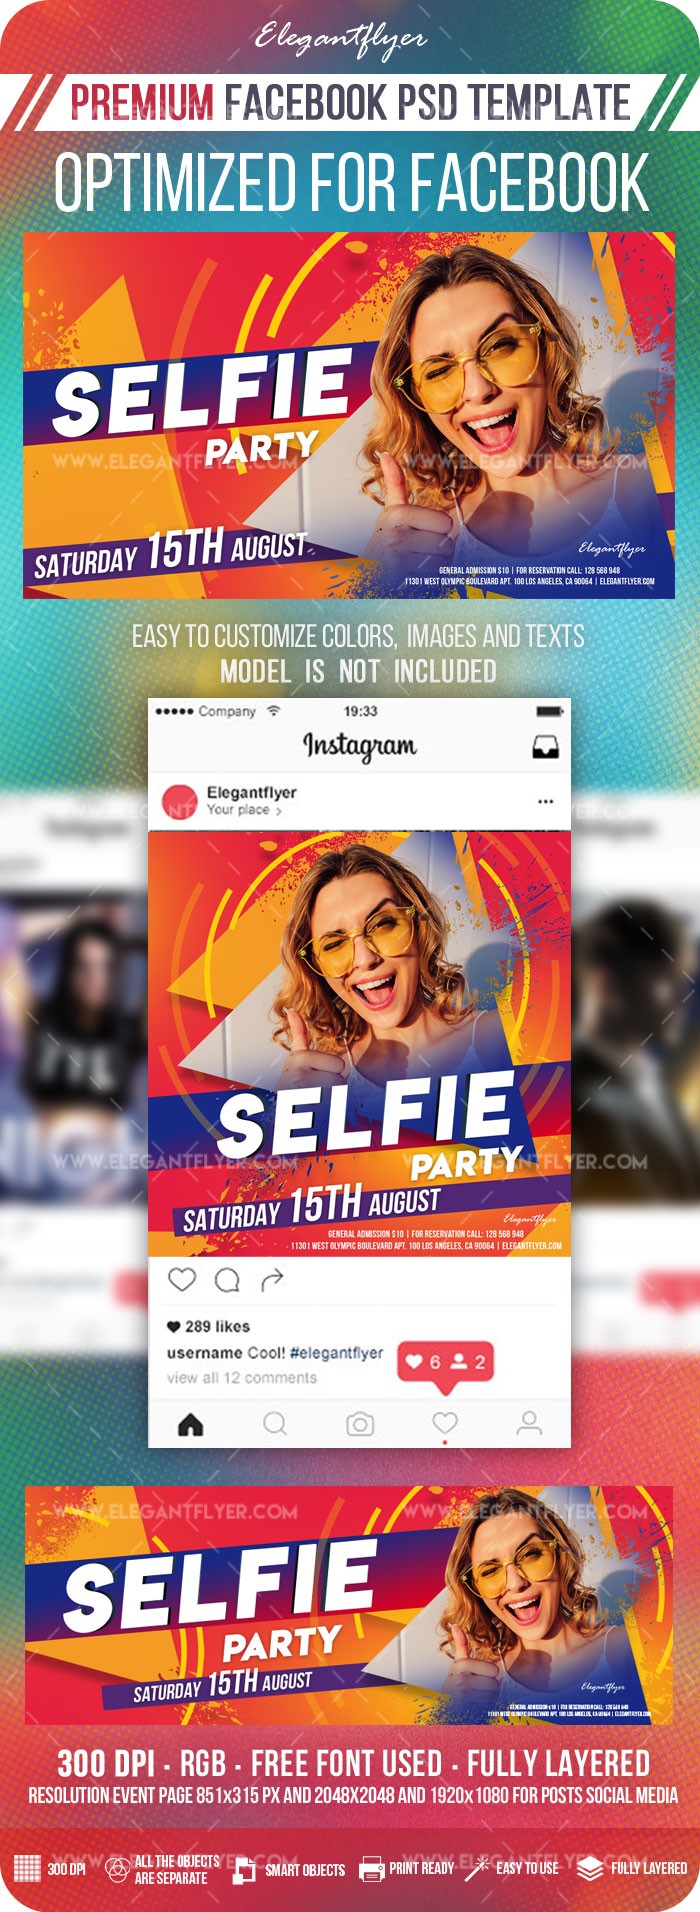 Selfie Party Facebook by ElegantFlyer